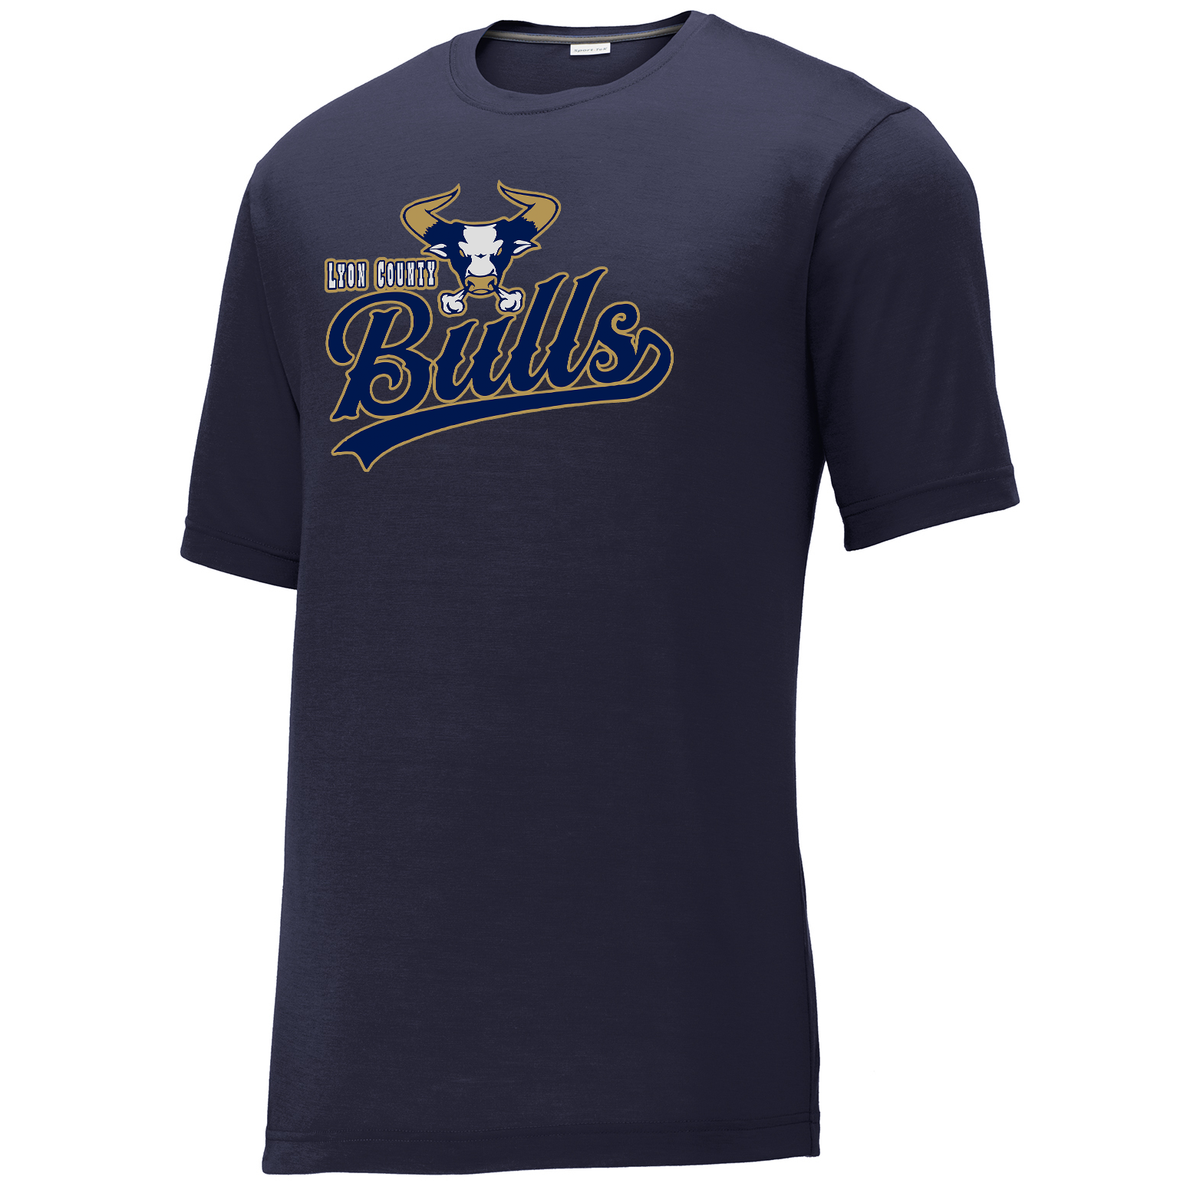 Lyon County Baseball CottonTouch Performance T-Shirt